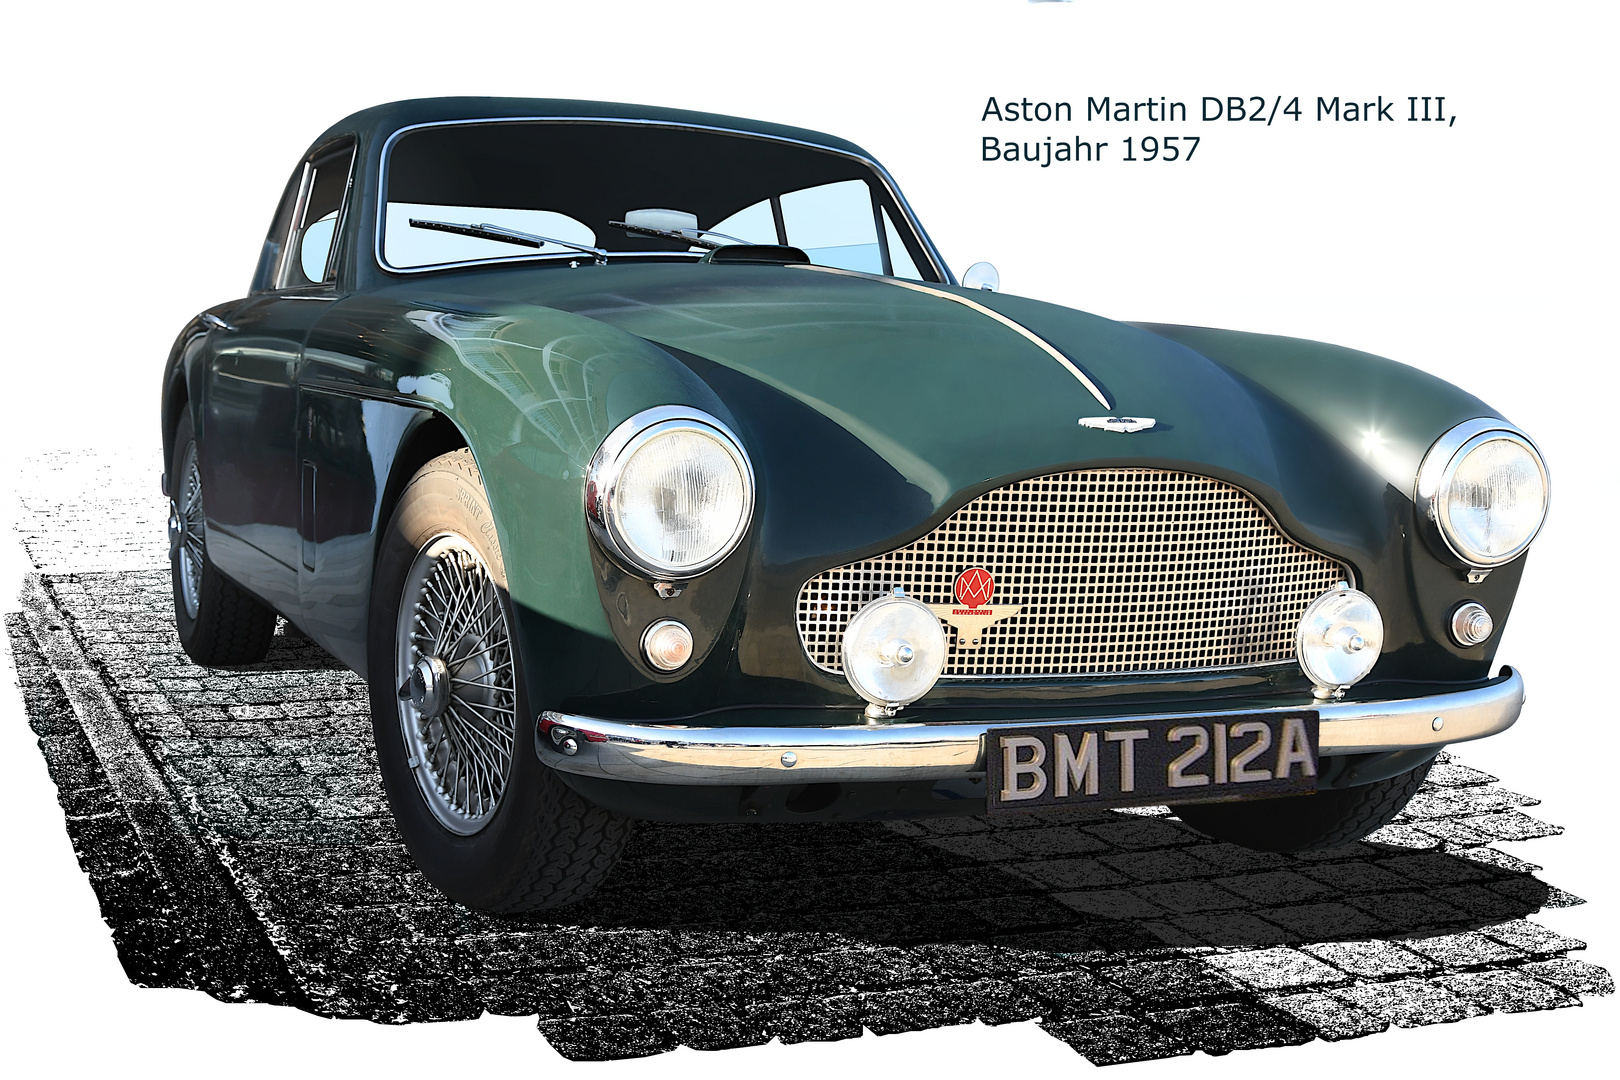 Aston Martin DB2/4 Mark III